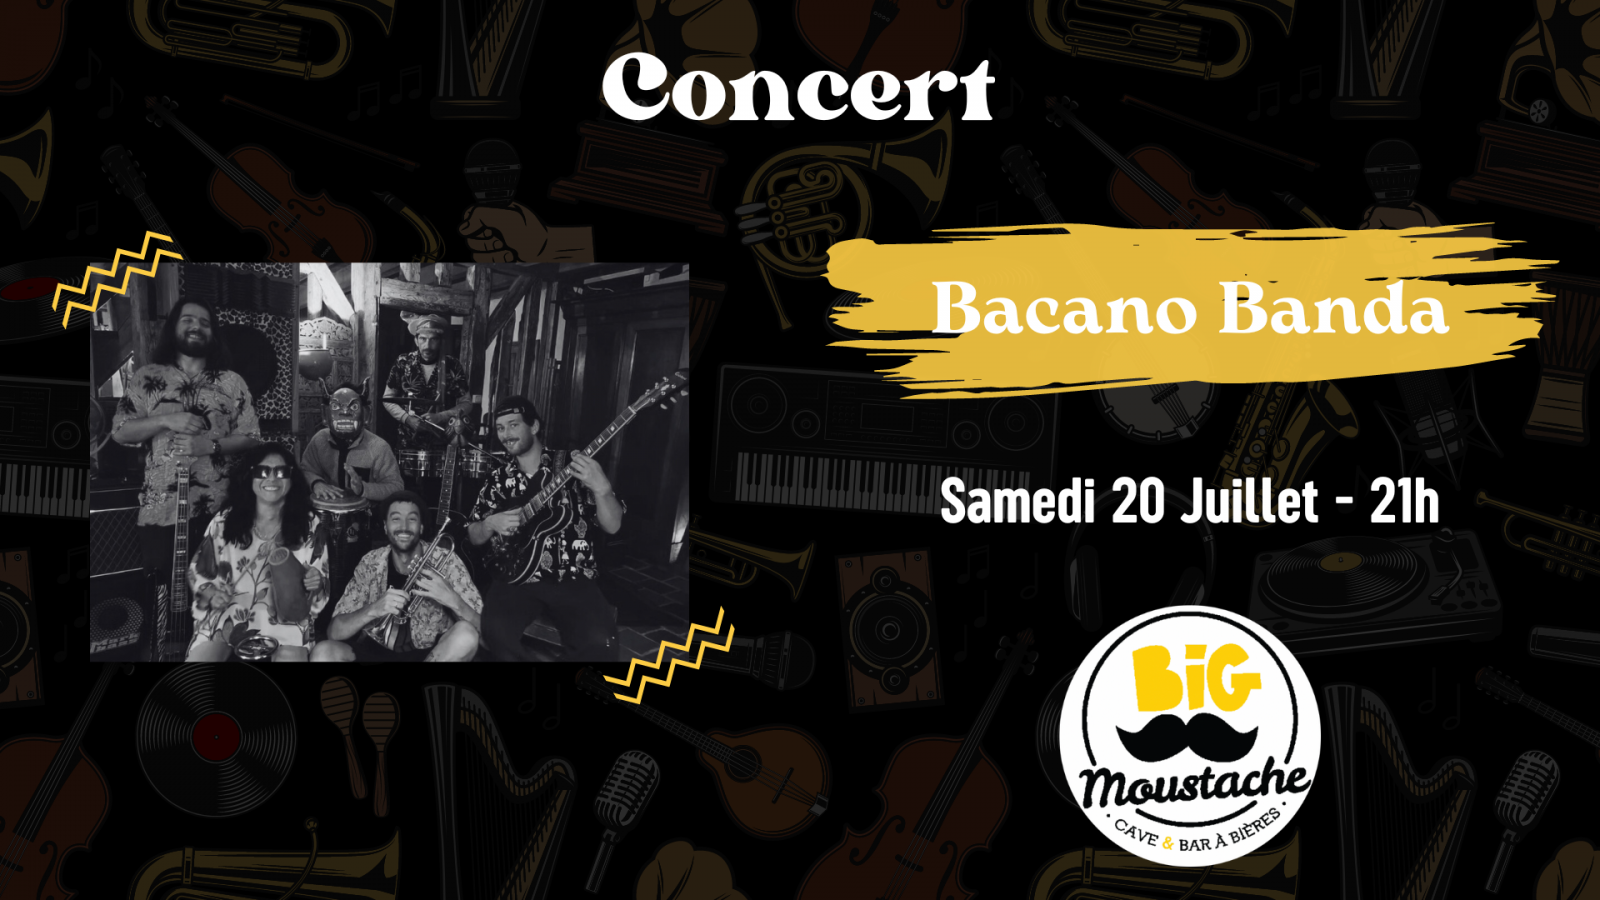 Concert de Bacano Banda au Big Moustache